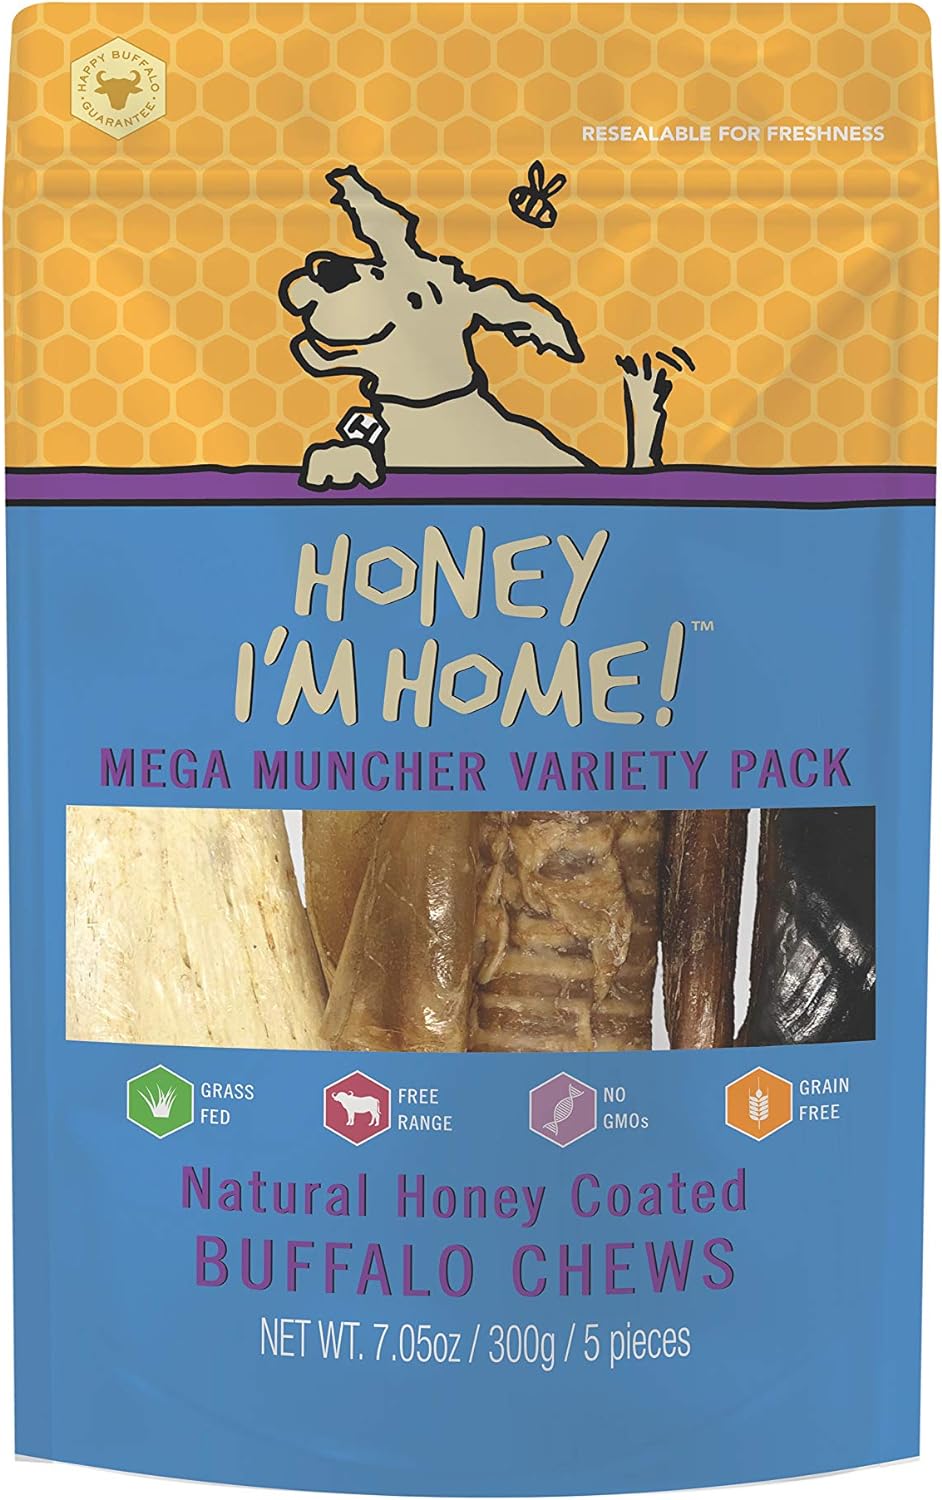 Honey I'M Home Buffalo Chews Mega Muncher Variety Pack  Image